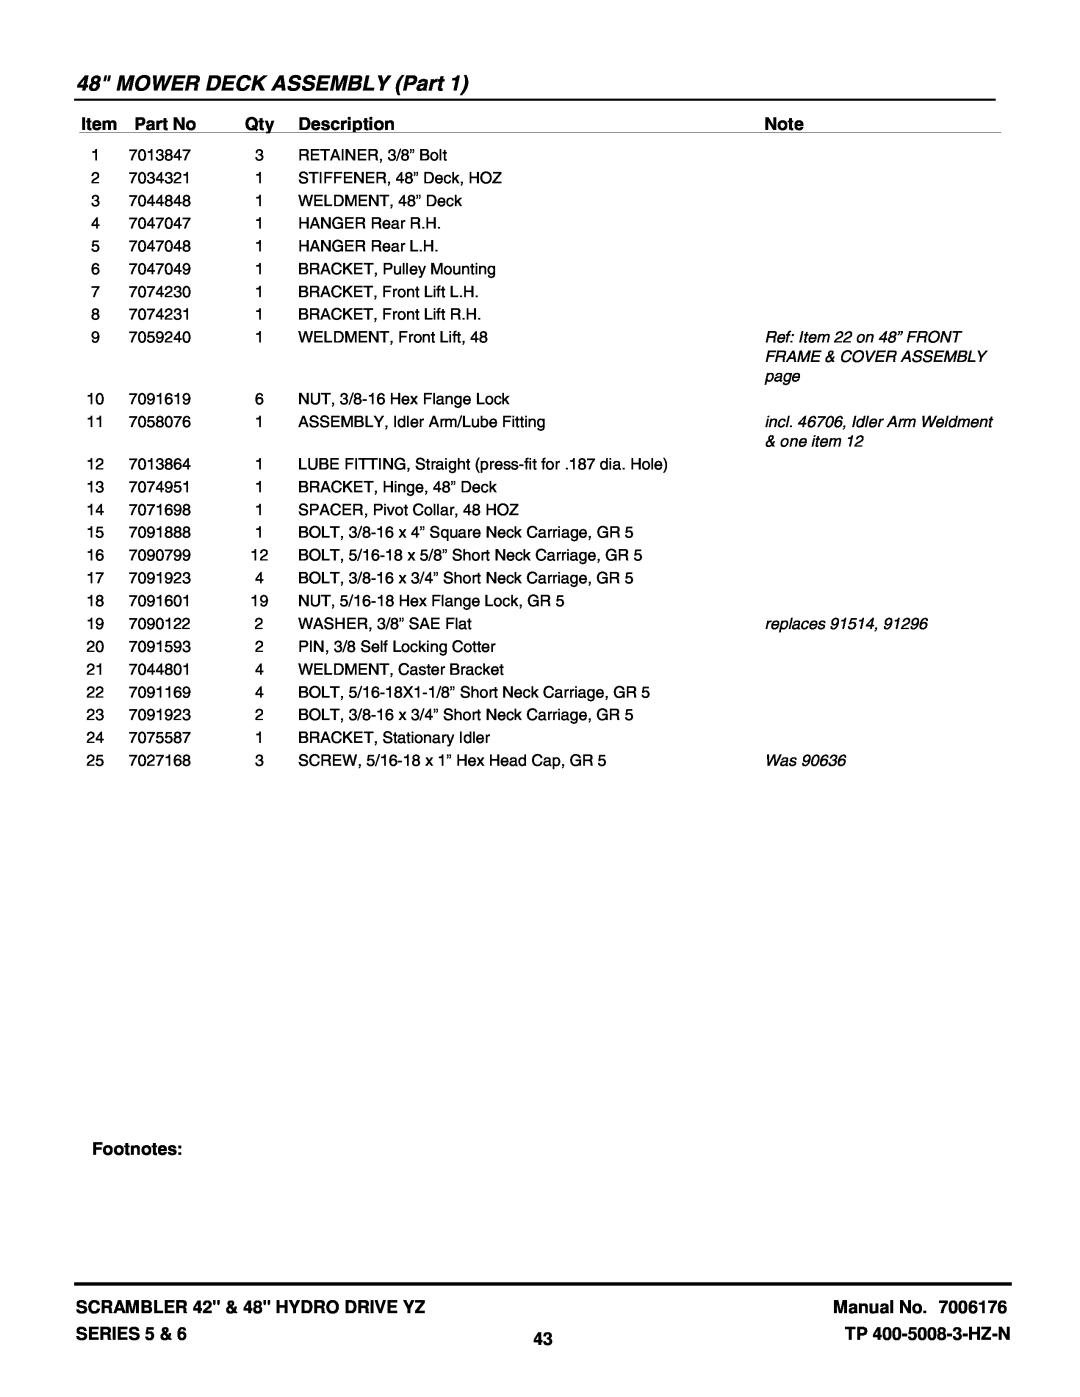 Snapper YZ20486BVE MOWER DECK ASSEMBLY Part, Description, Footnotes, SCRAMBLER 42 & 48 HYDRO DRIVE YZ, Manual No, Series 